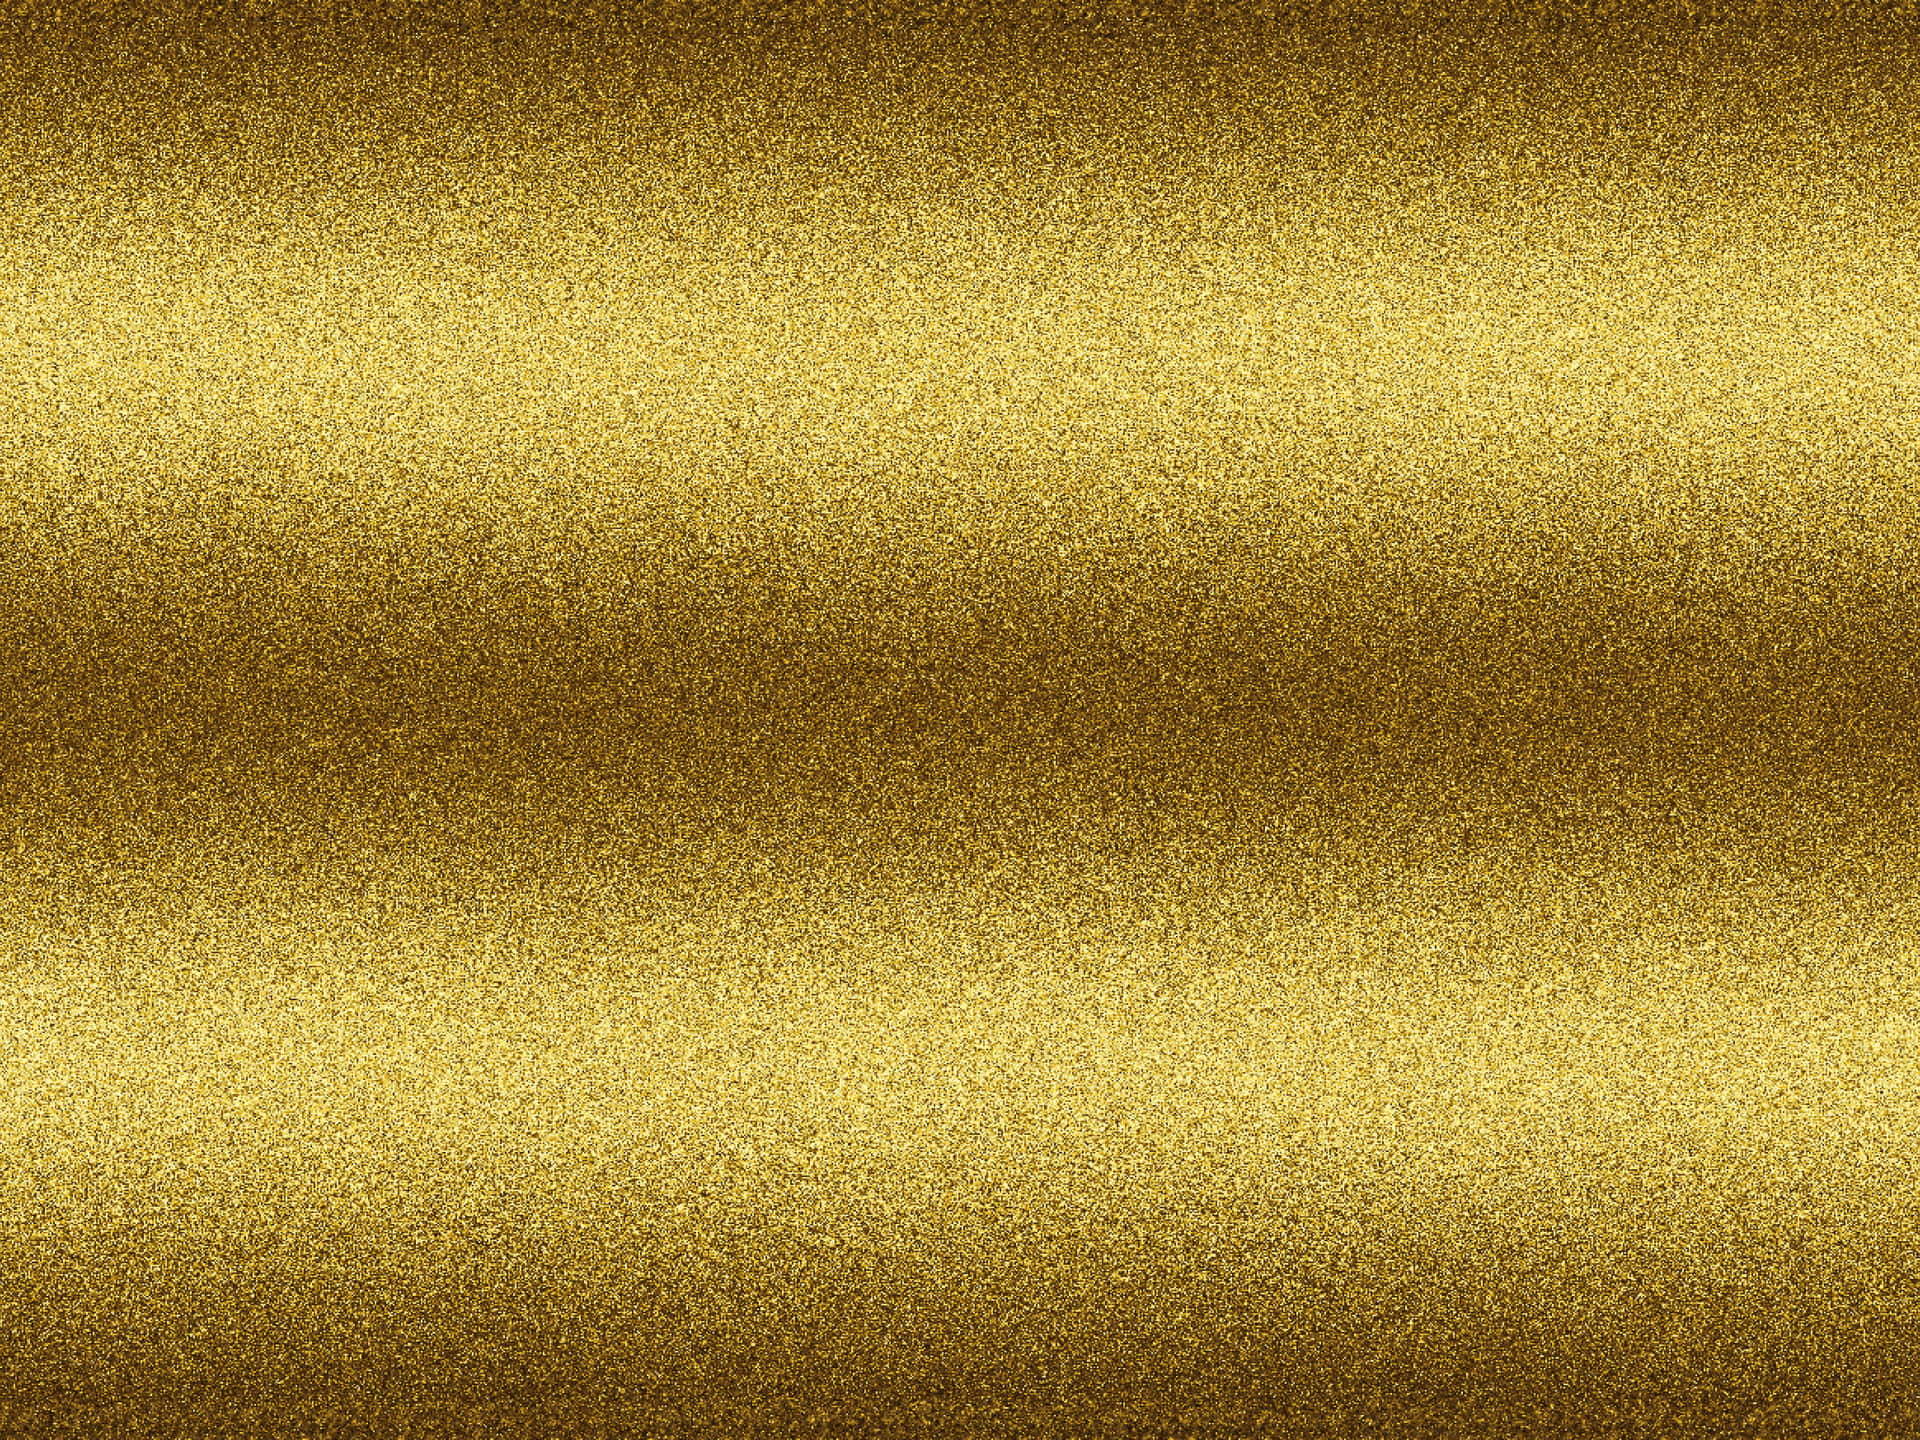 An image of a metallic gold surface Wallpaper